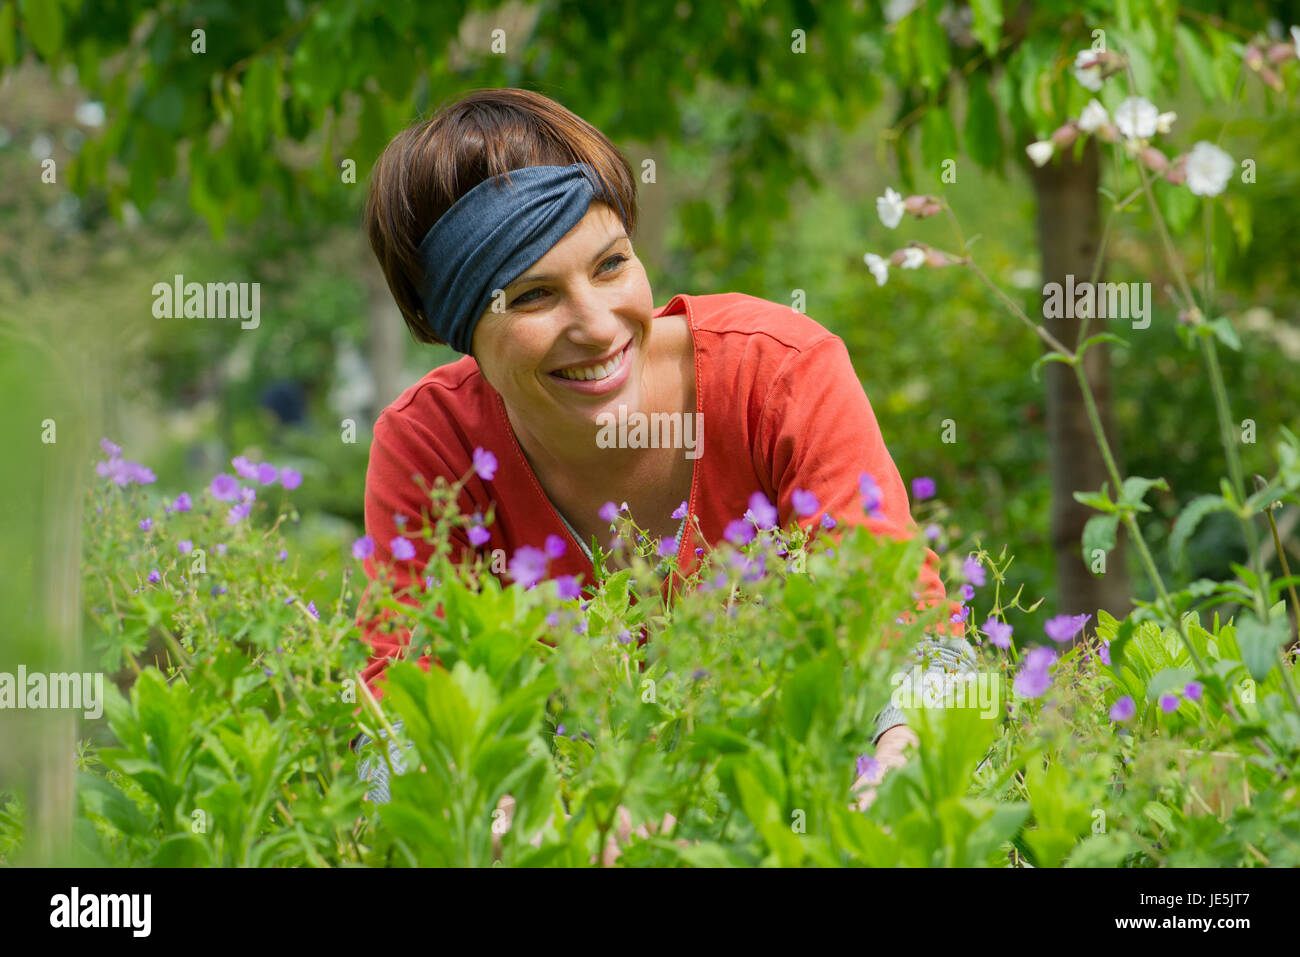 Woman smiling in garden Stock Photo